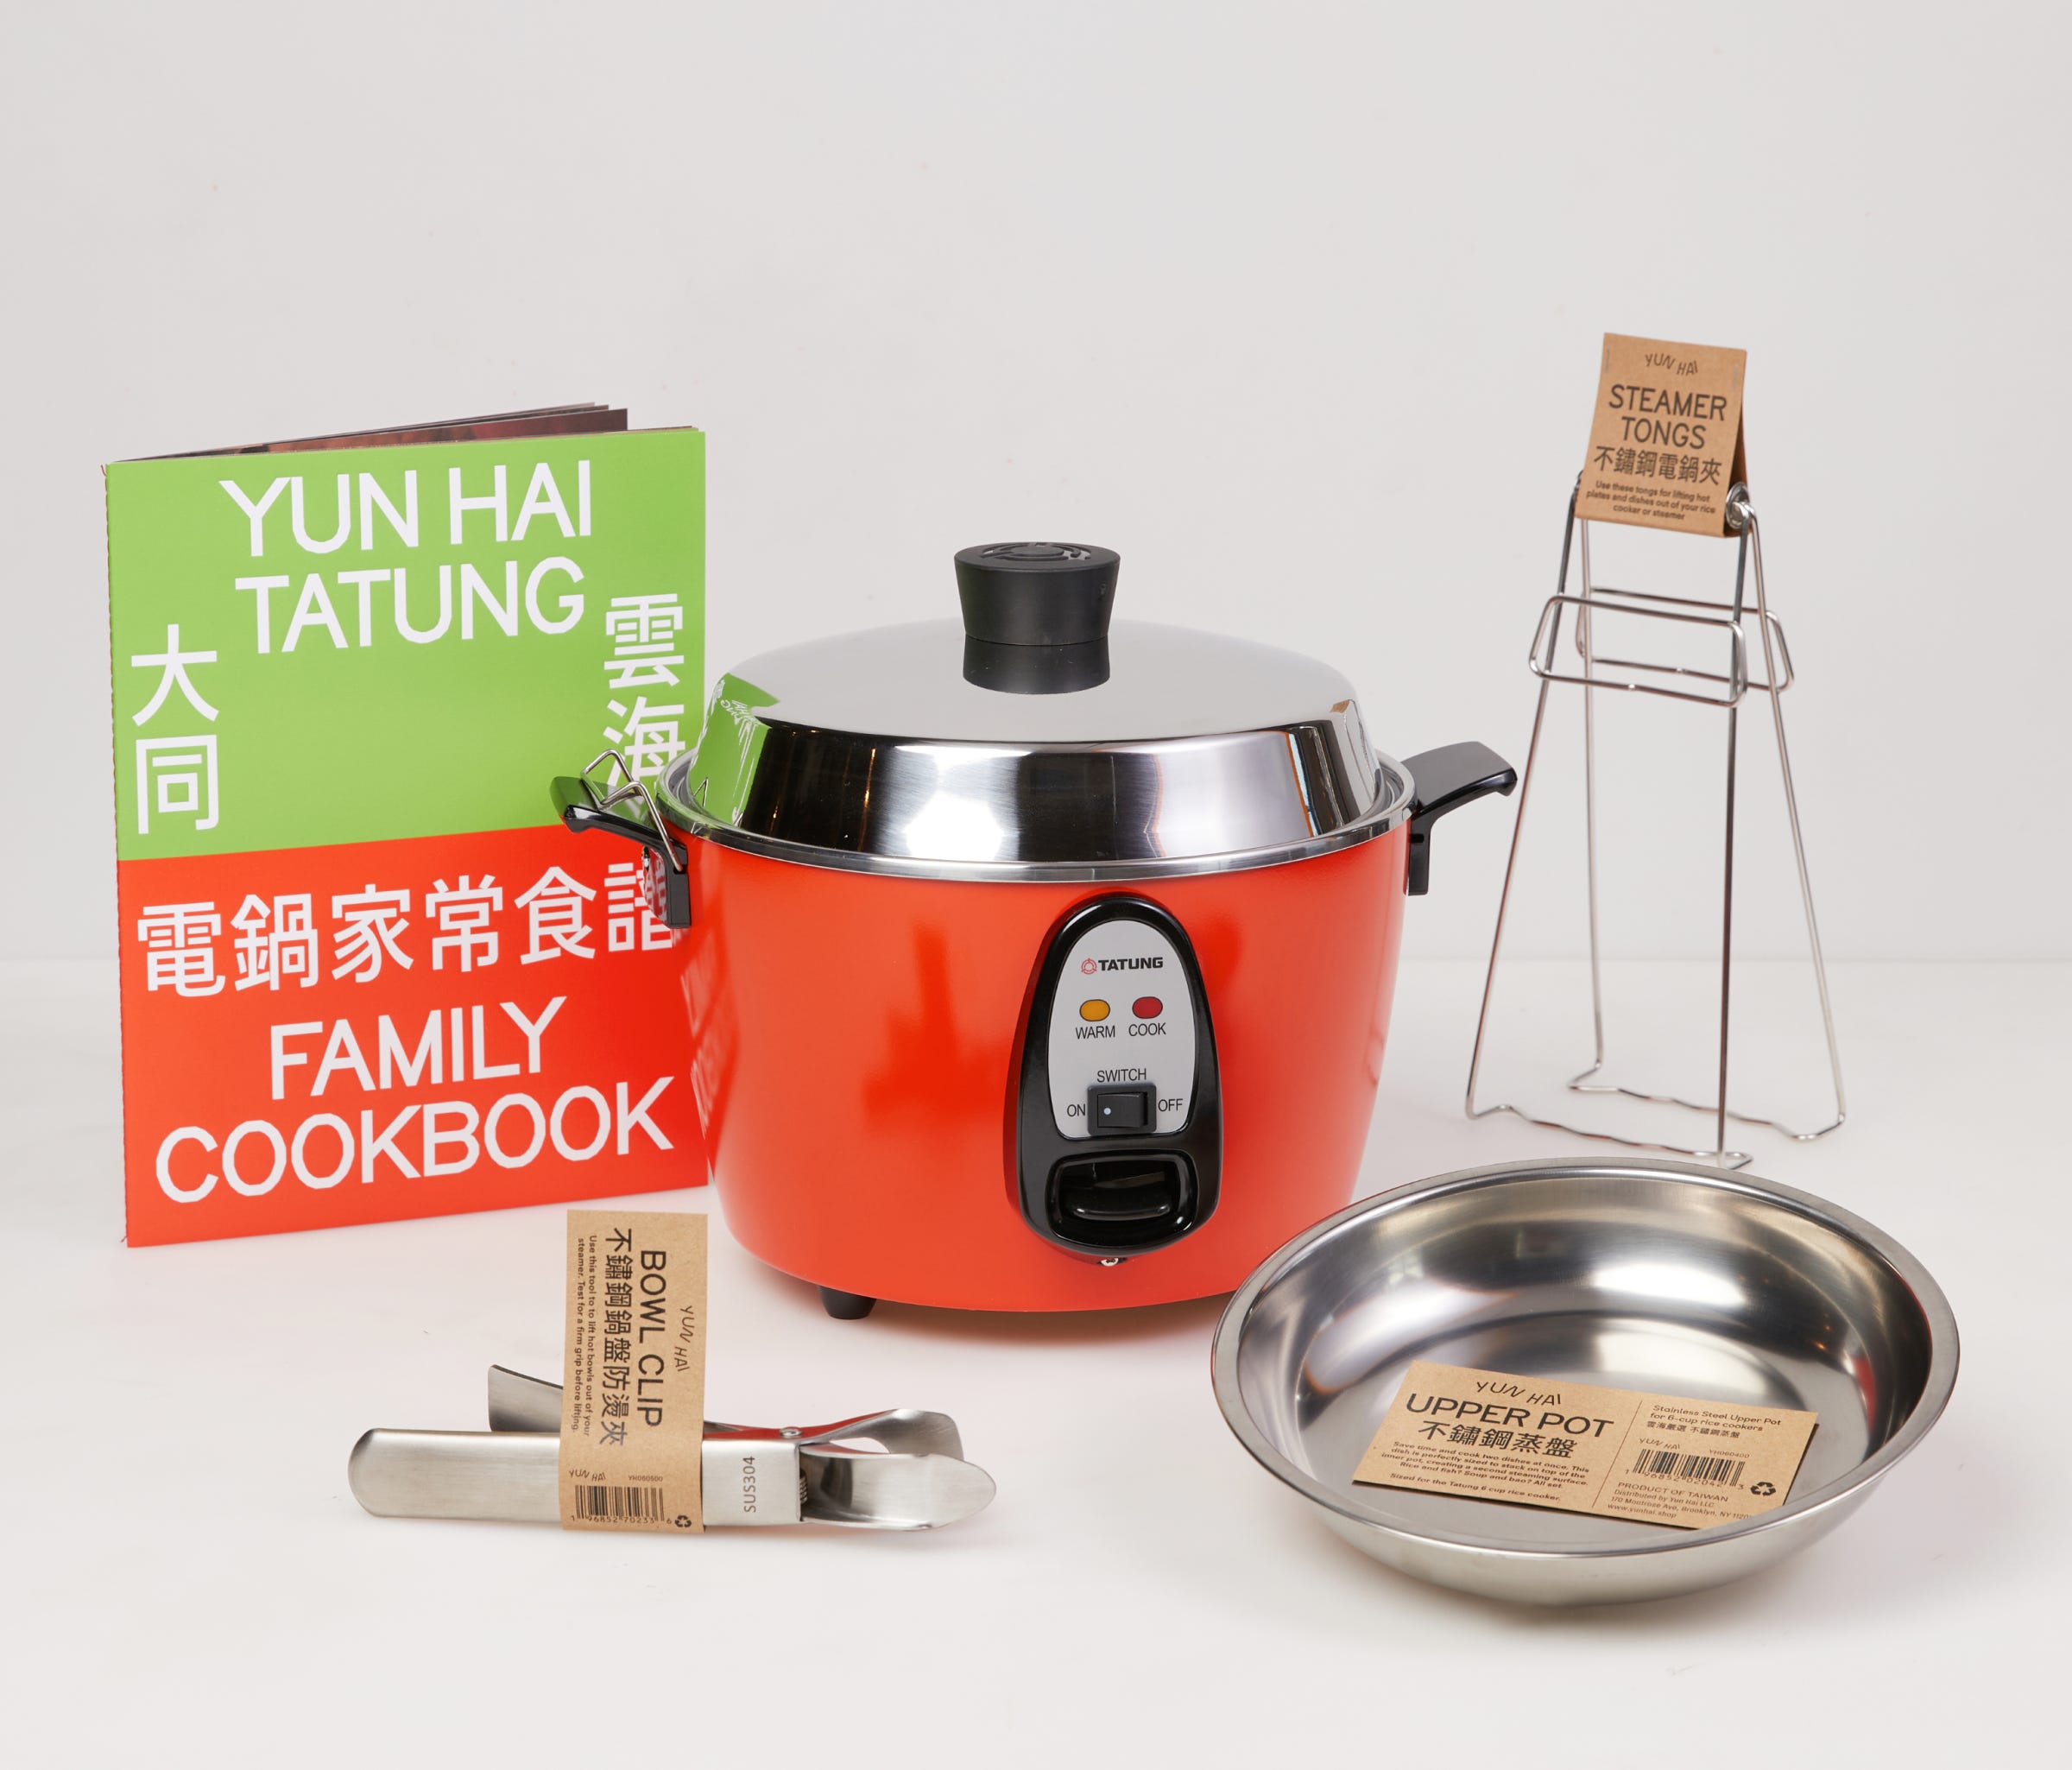 Tatung Multi-Functional Full Stainless Steel Rice Cooker